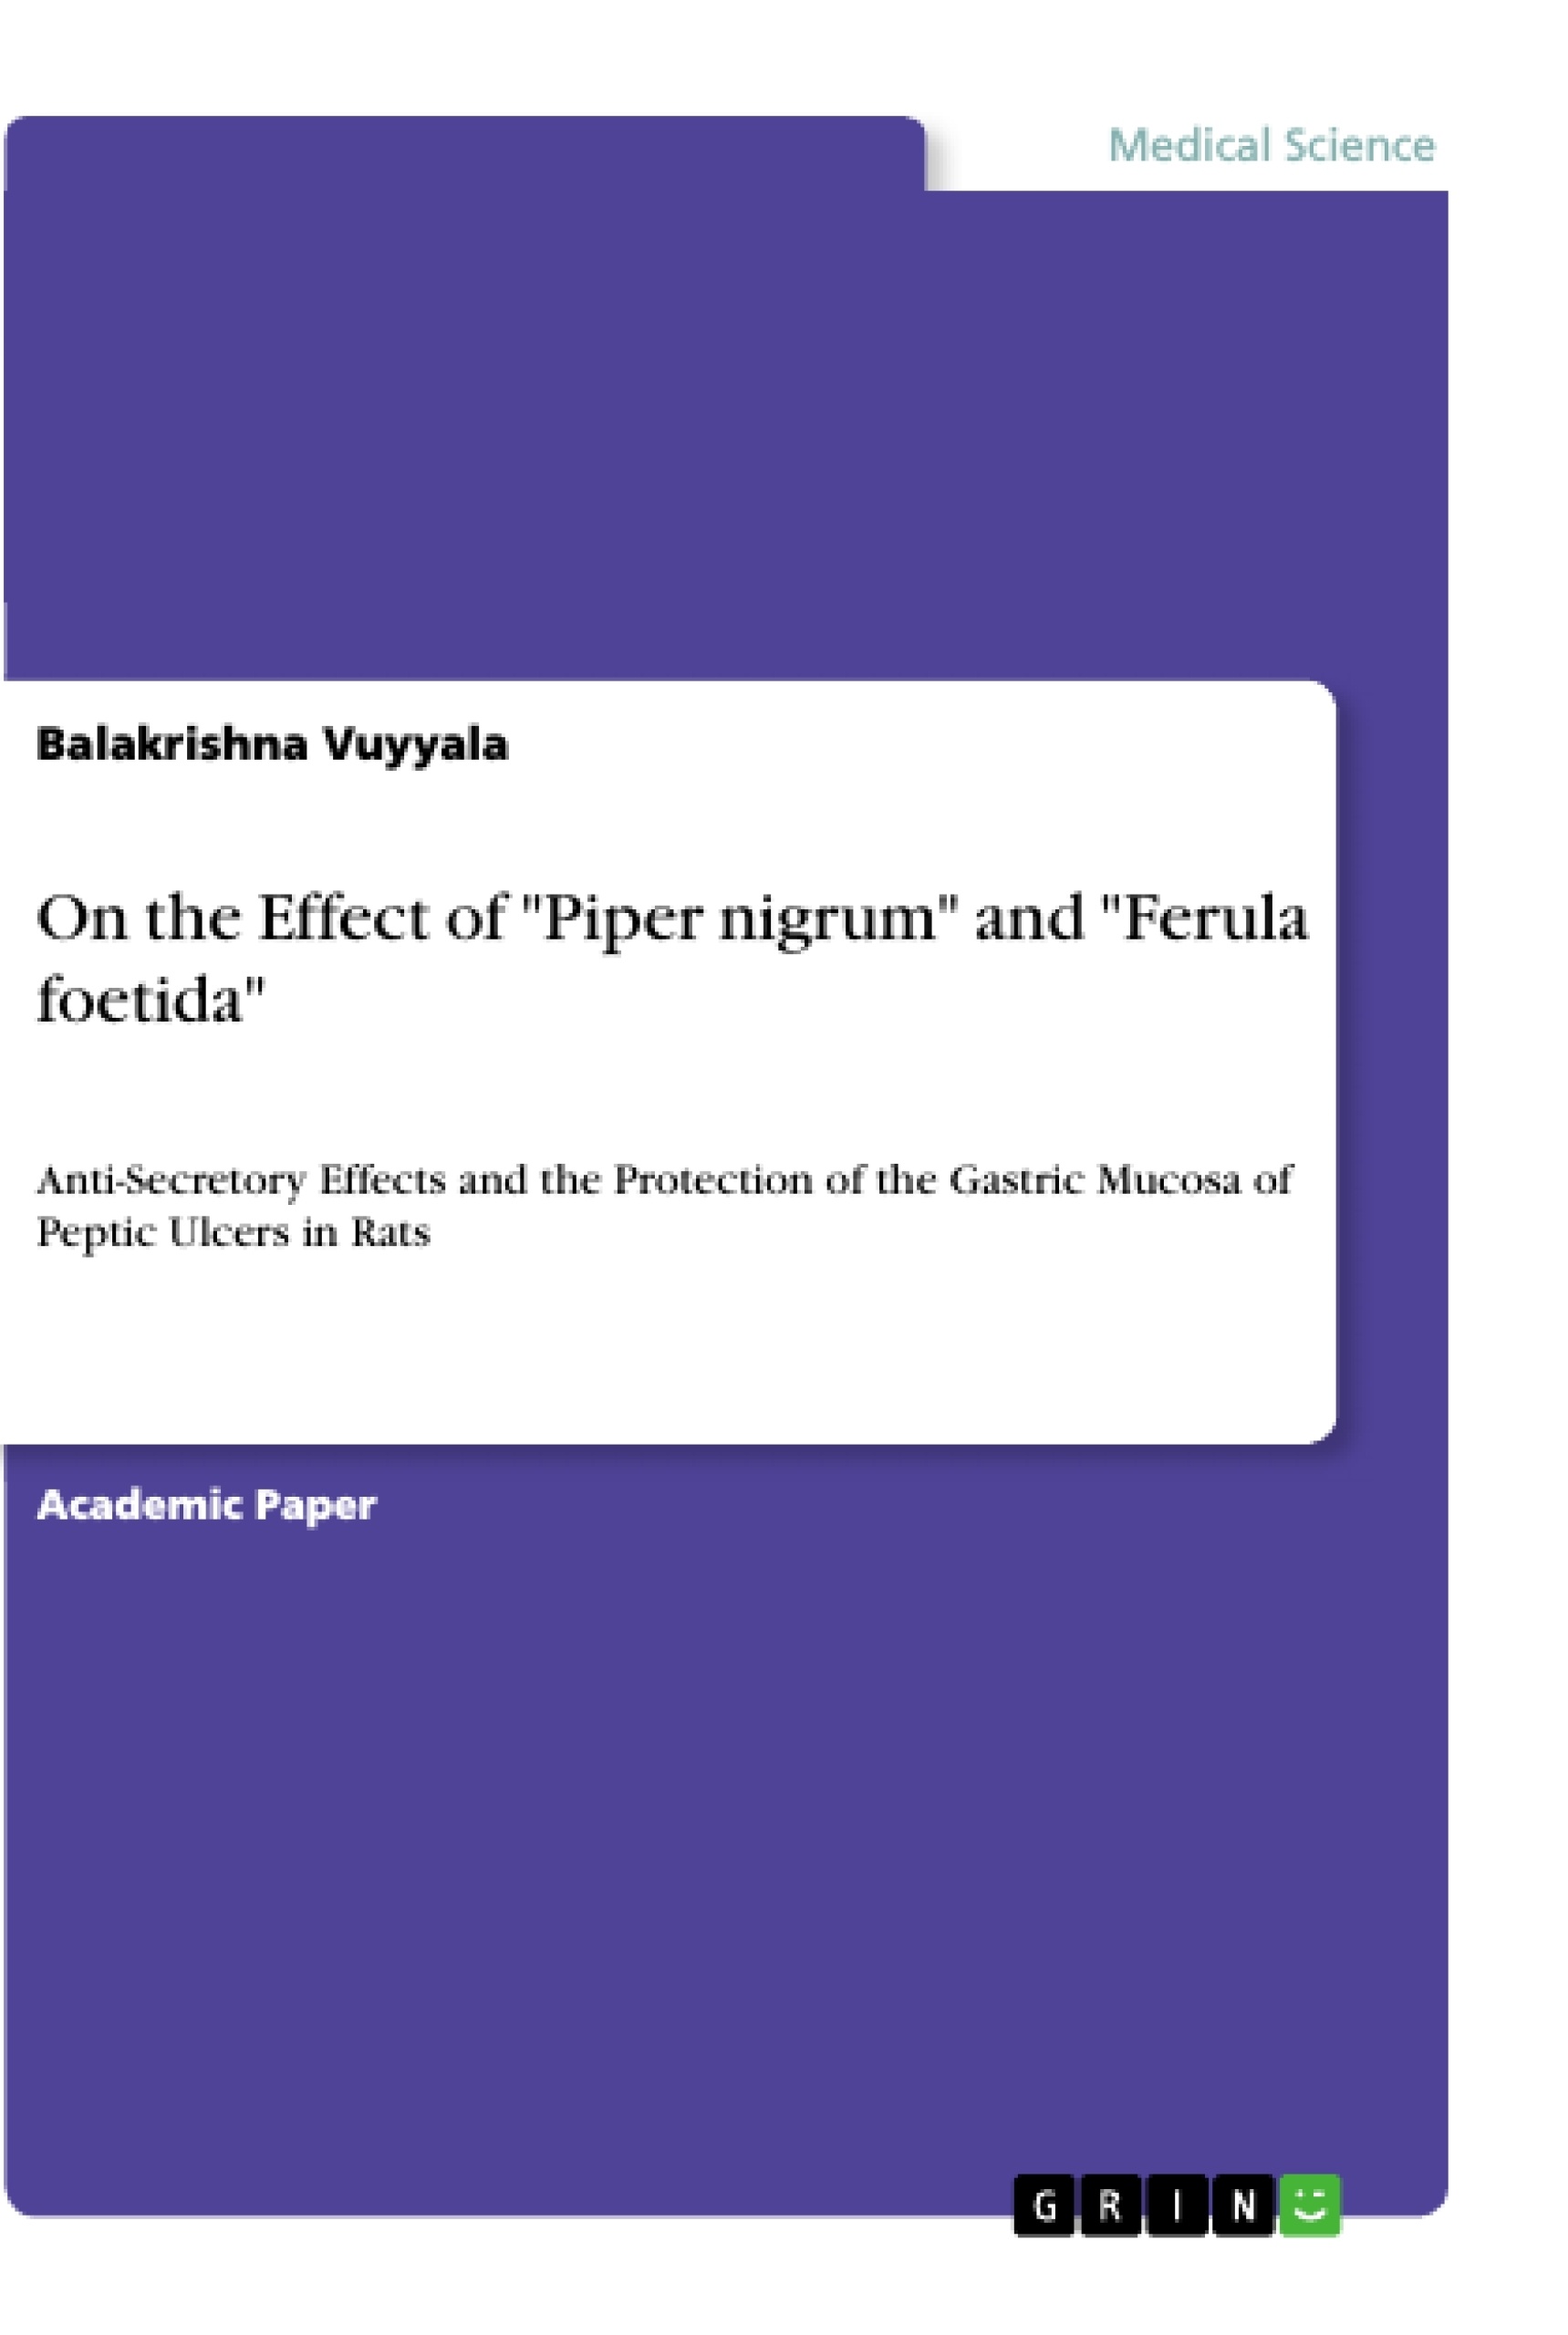 Titel: On the Effect of "Piper nigrum" and "Ferula foetida"